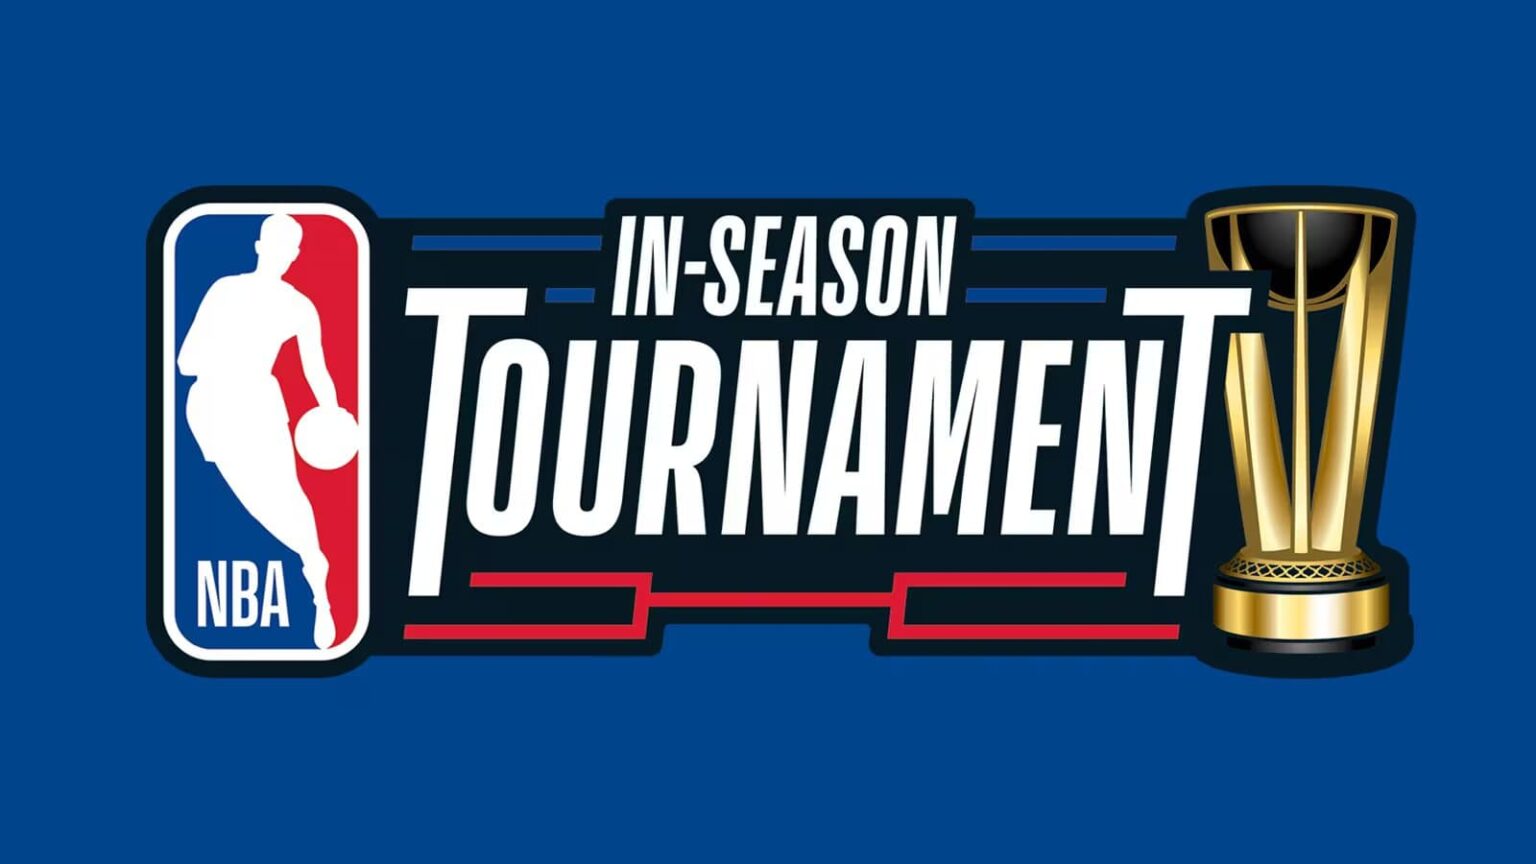 NBA In-Season Tournament nba tournament predictions